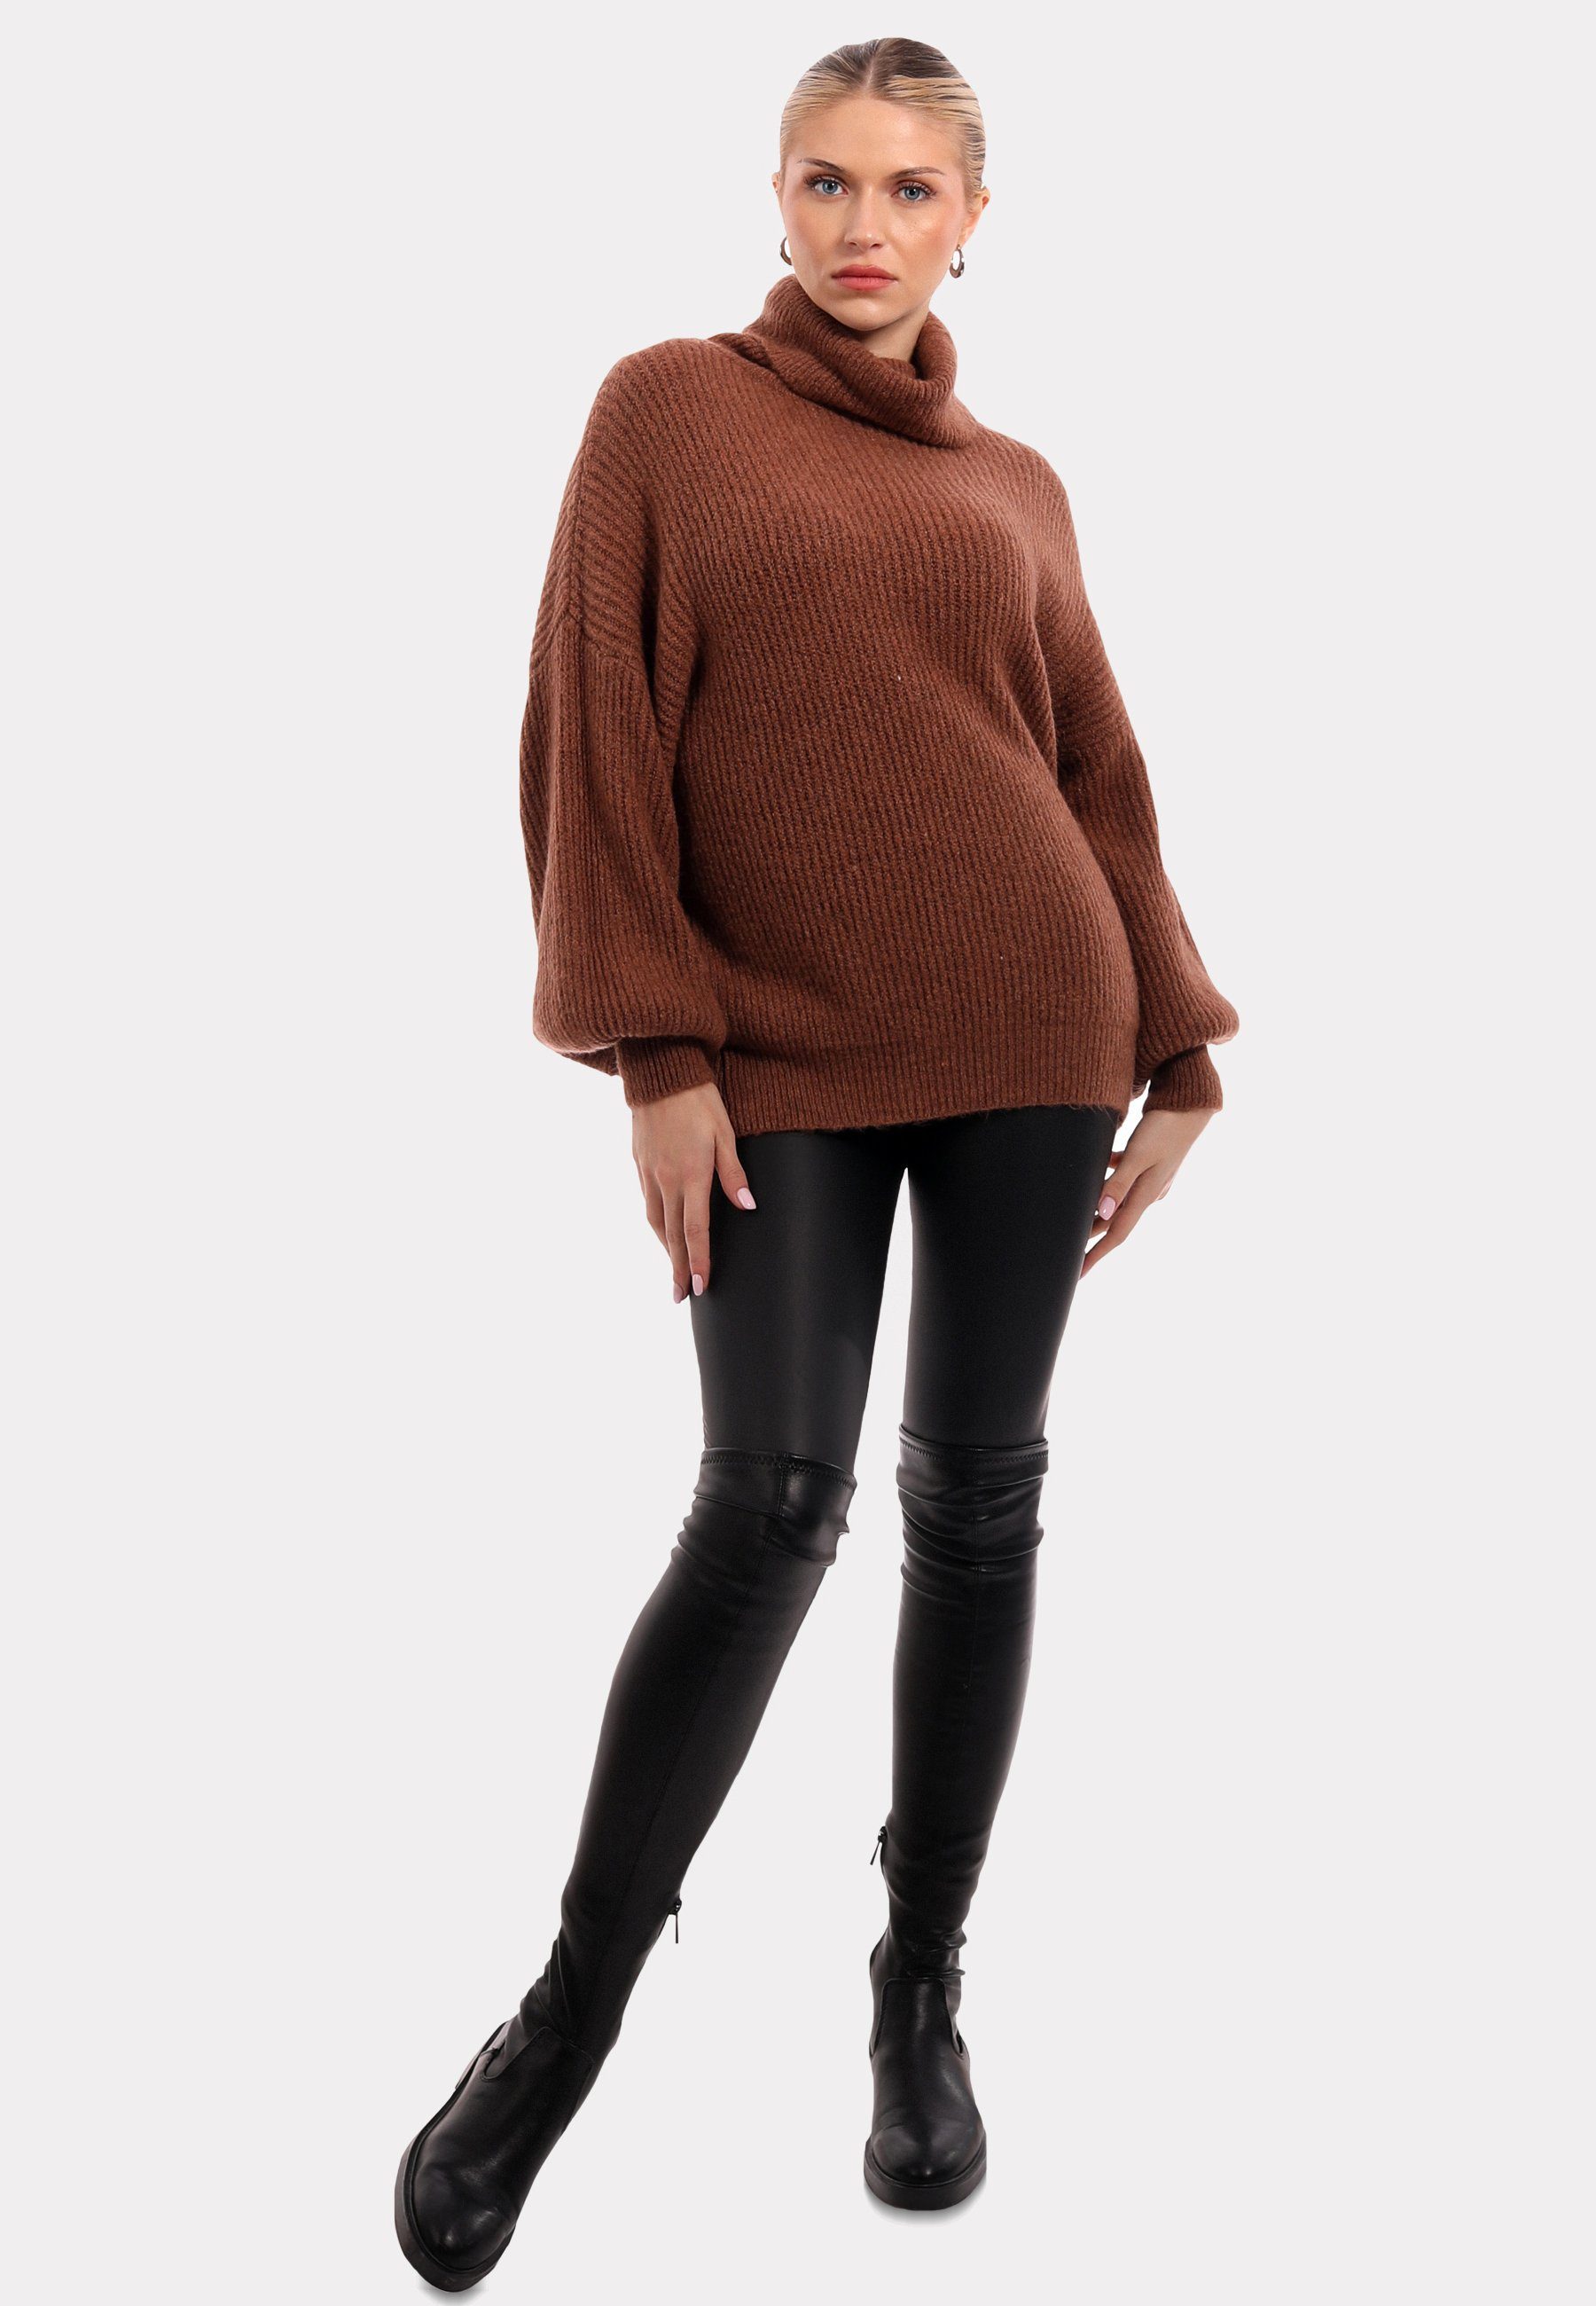 Rollkragen Rollkragenpullover Casual in Winter Pullover & Unifarbe YC Camel Style mit Fashion Sweater